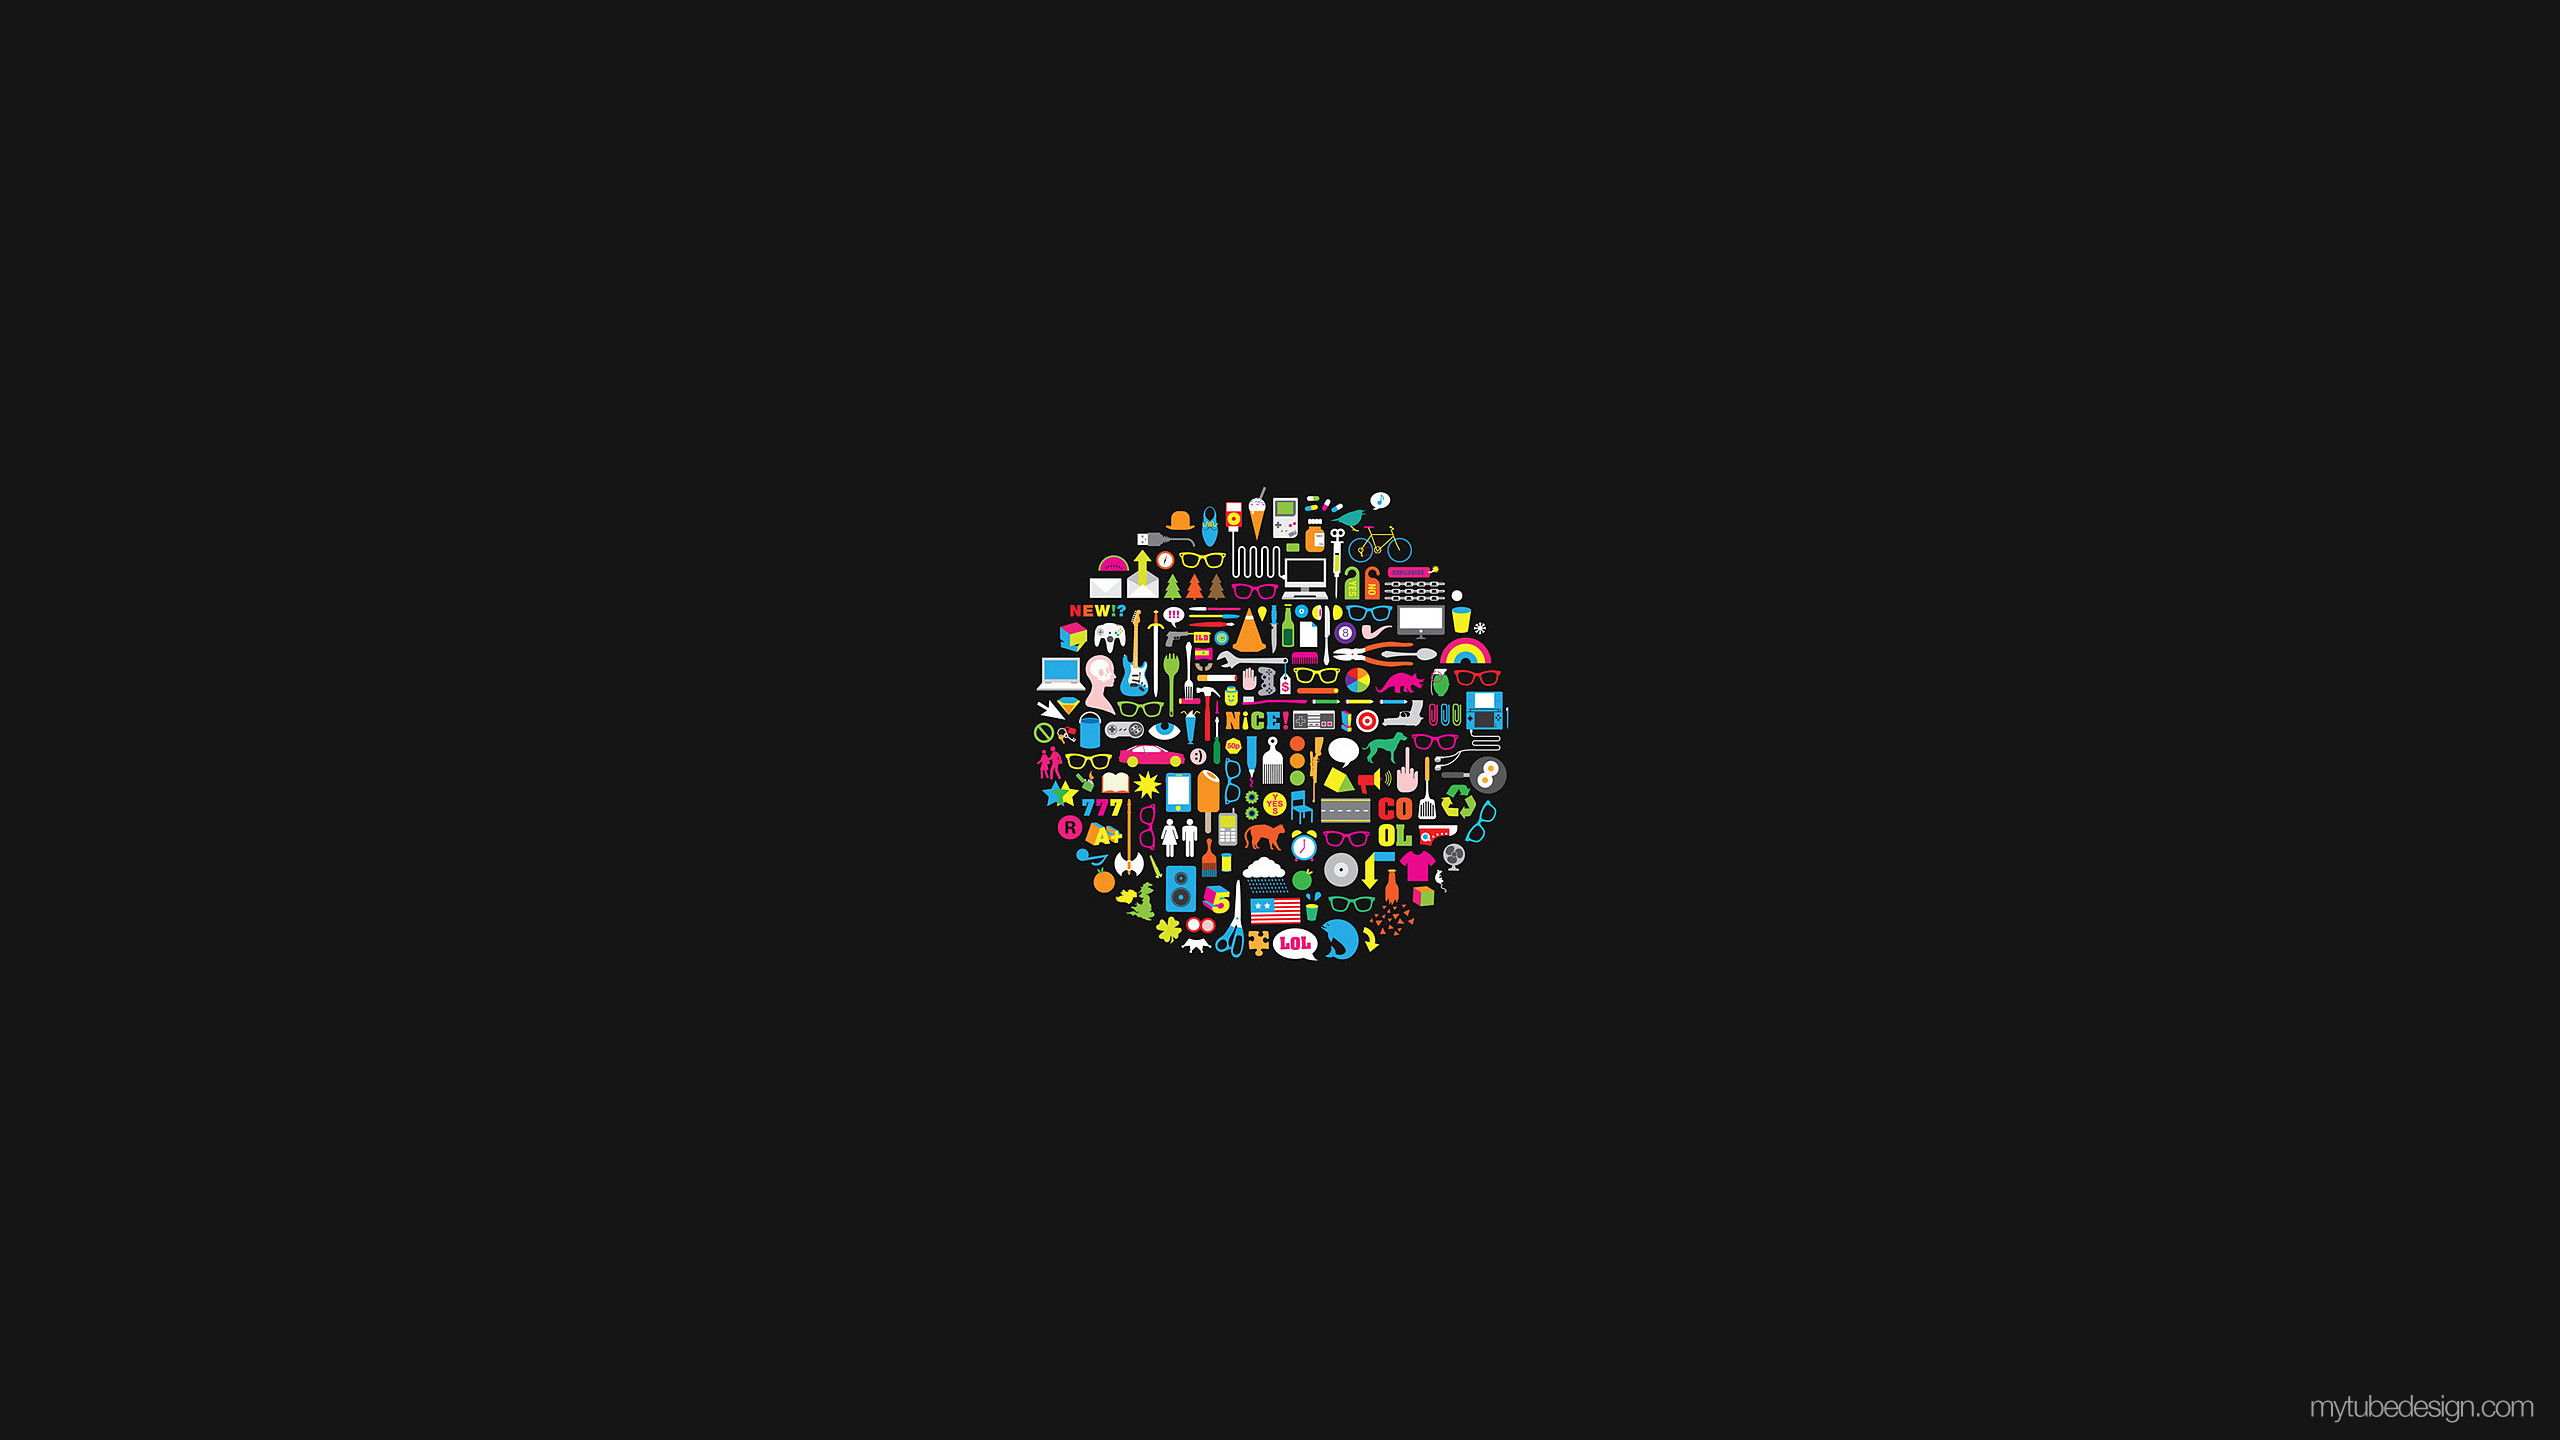 Emoji Wallpaper For Youtube Profile Youtube Wallpapers 79 Wallpapers Hd Wallpapers 2560x1440